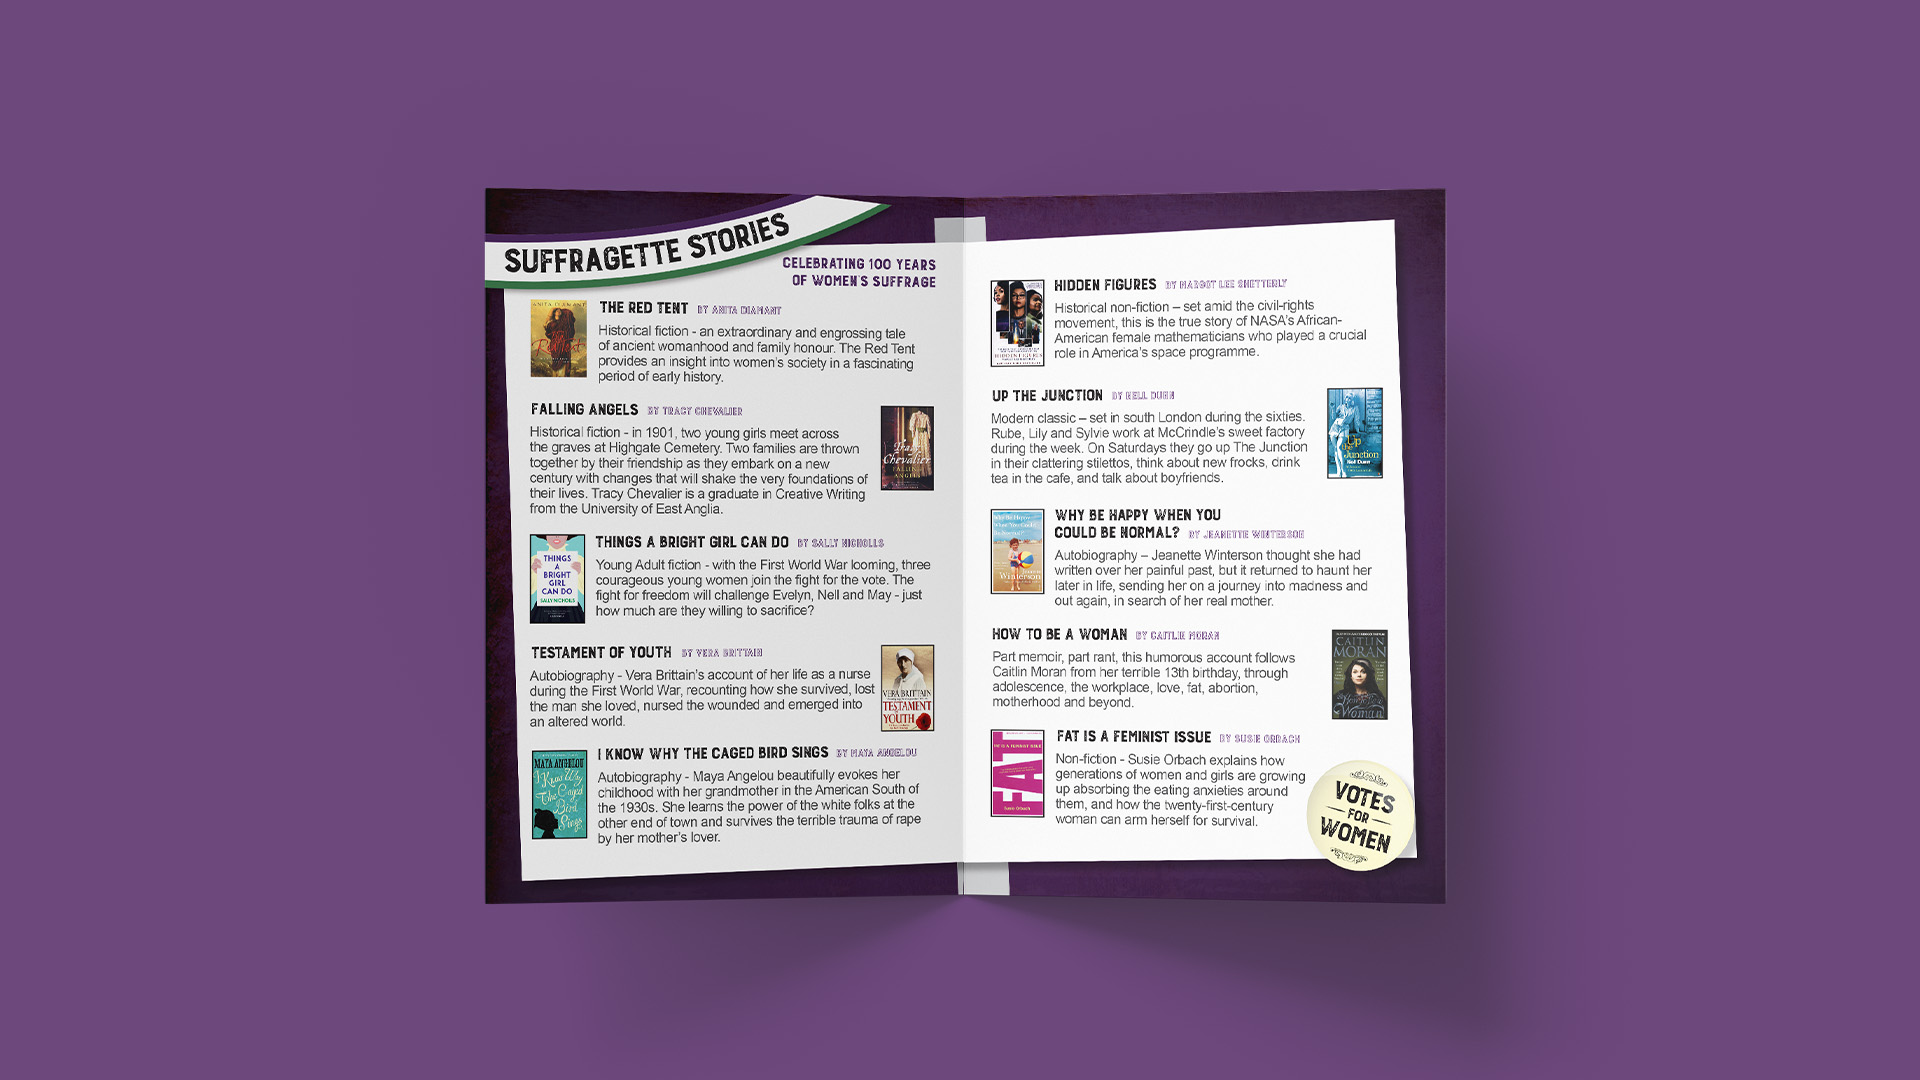 Suffragette Stories booklet open